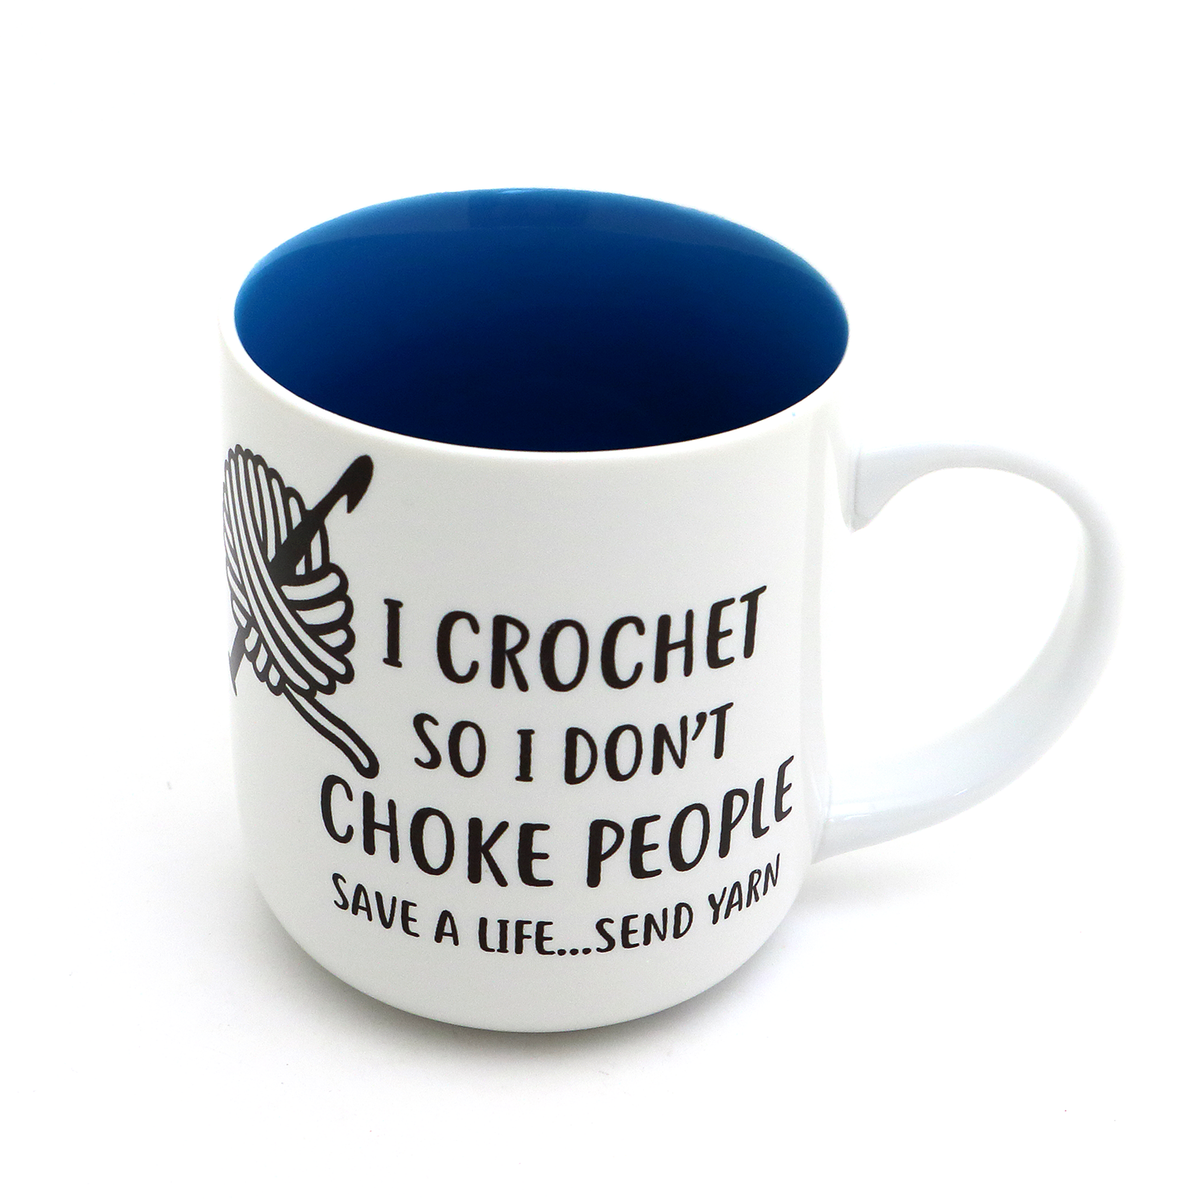 Crochet - I crochet so i don't kill people - 20 oz. Mug